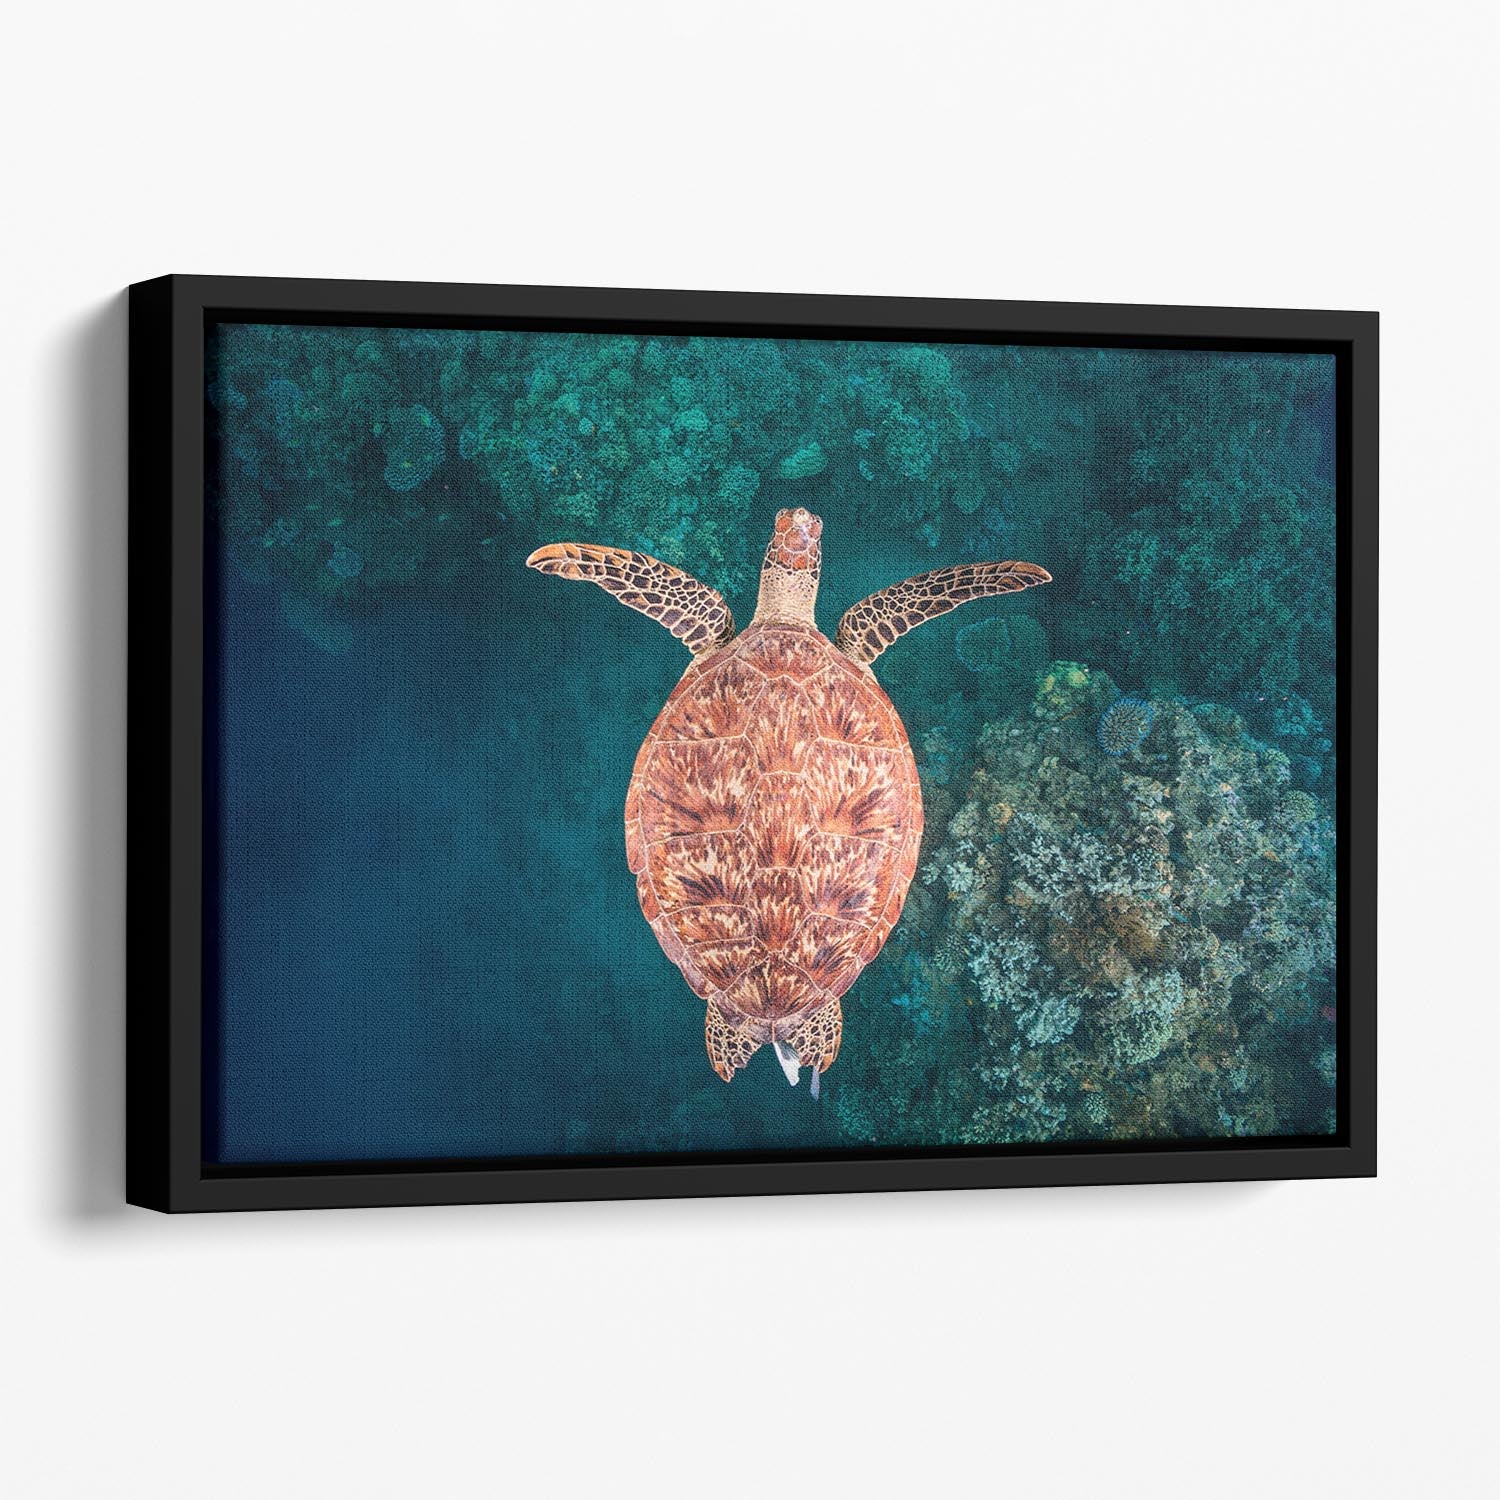 Flying Over The Reef Floating Framed Canvas - Canvas Art Rocks - 1